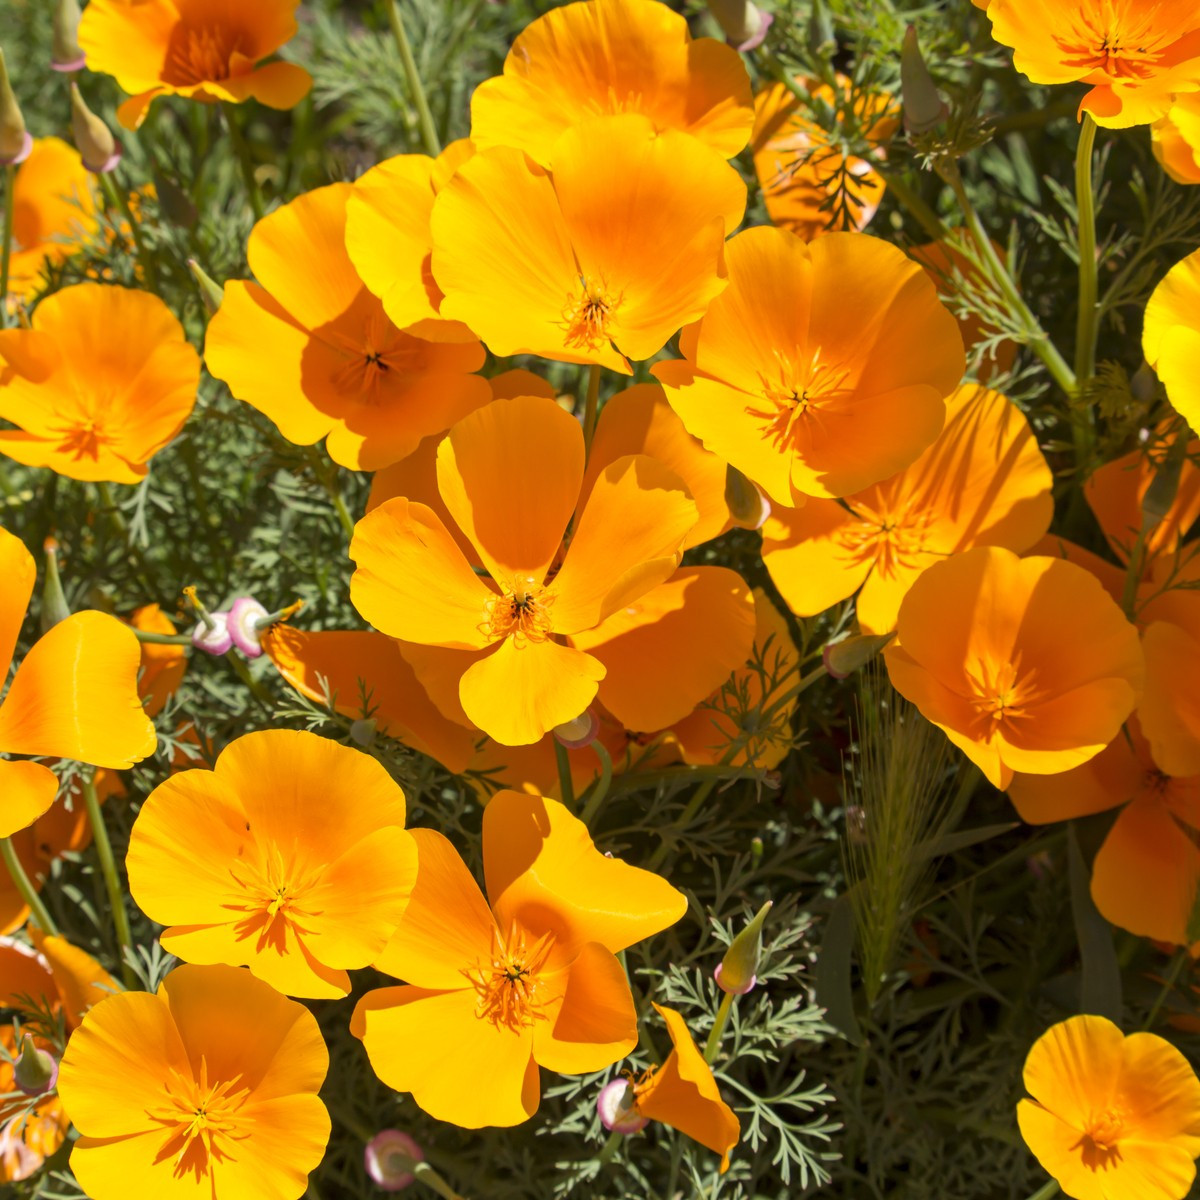 Sluncovka kalifornská oranžová - Eschscholzia californica - semena sluncovky - 200 ks